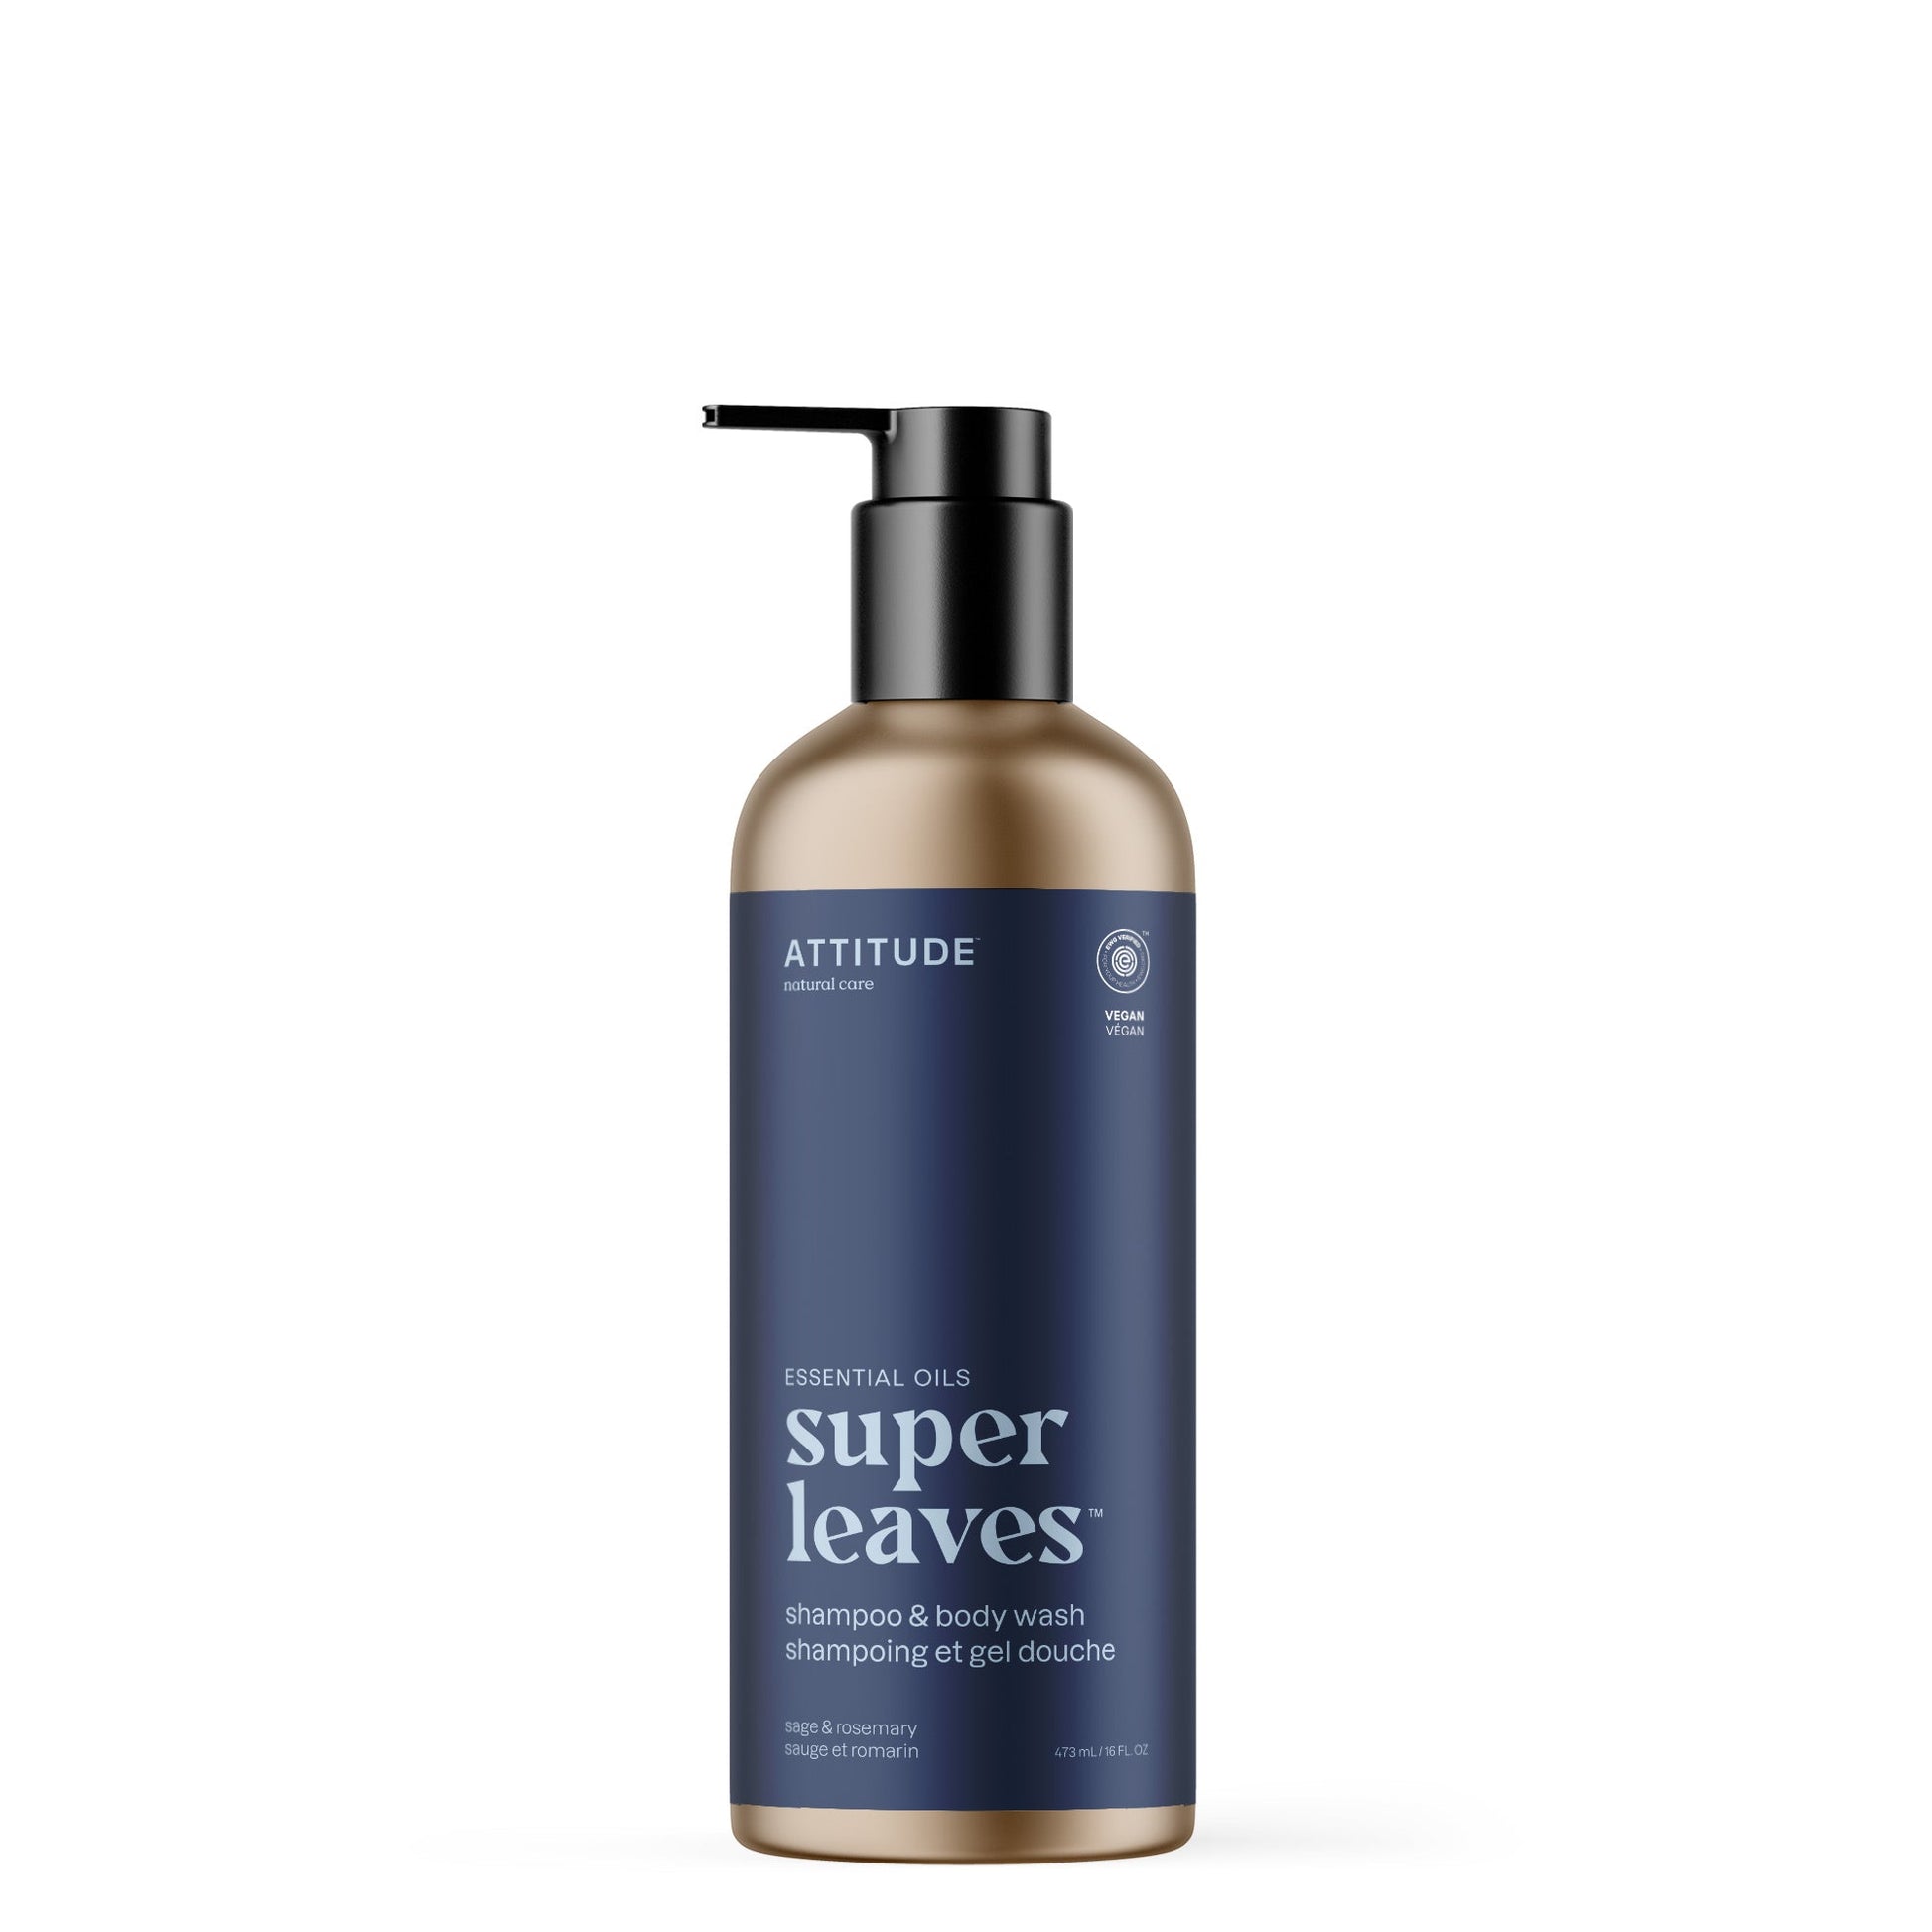 ATTITUDE Super Leaves Essential oils shampoo body wash Sage and rosemary 19005-btob_en?_main? 473mL